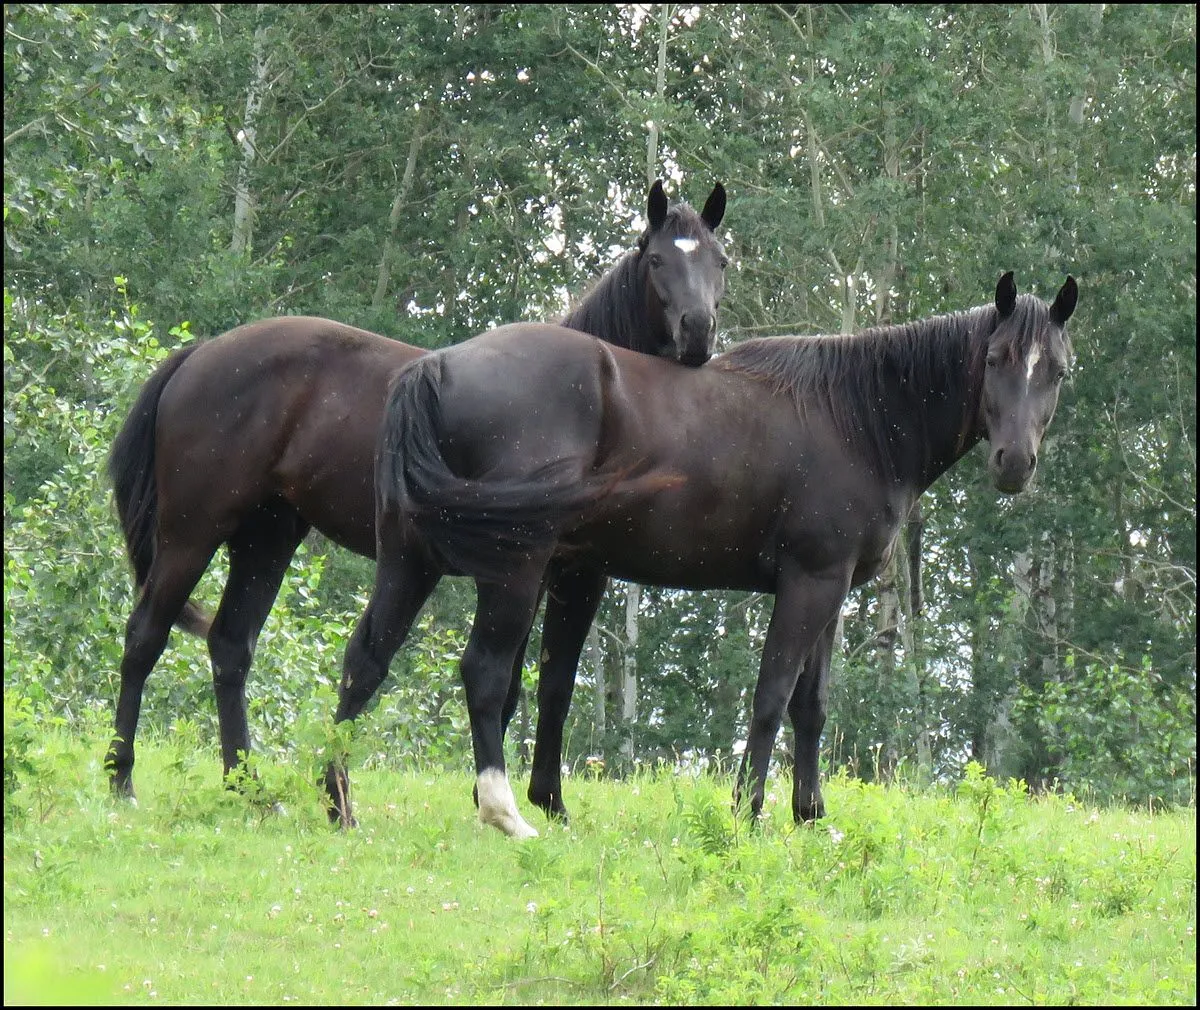 close up 2 black horse sisters together.JPG